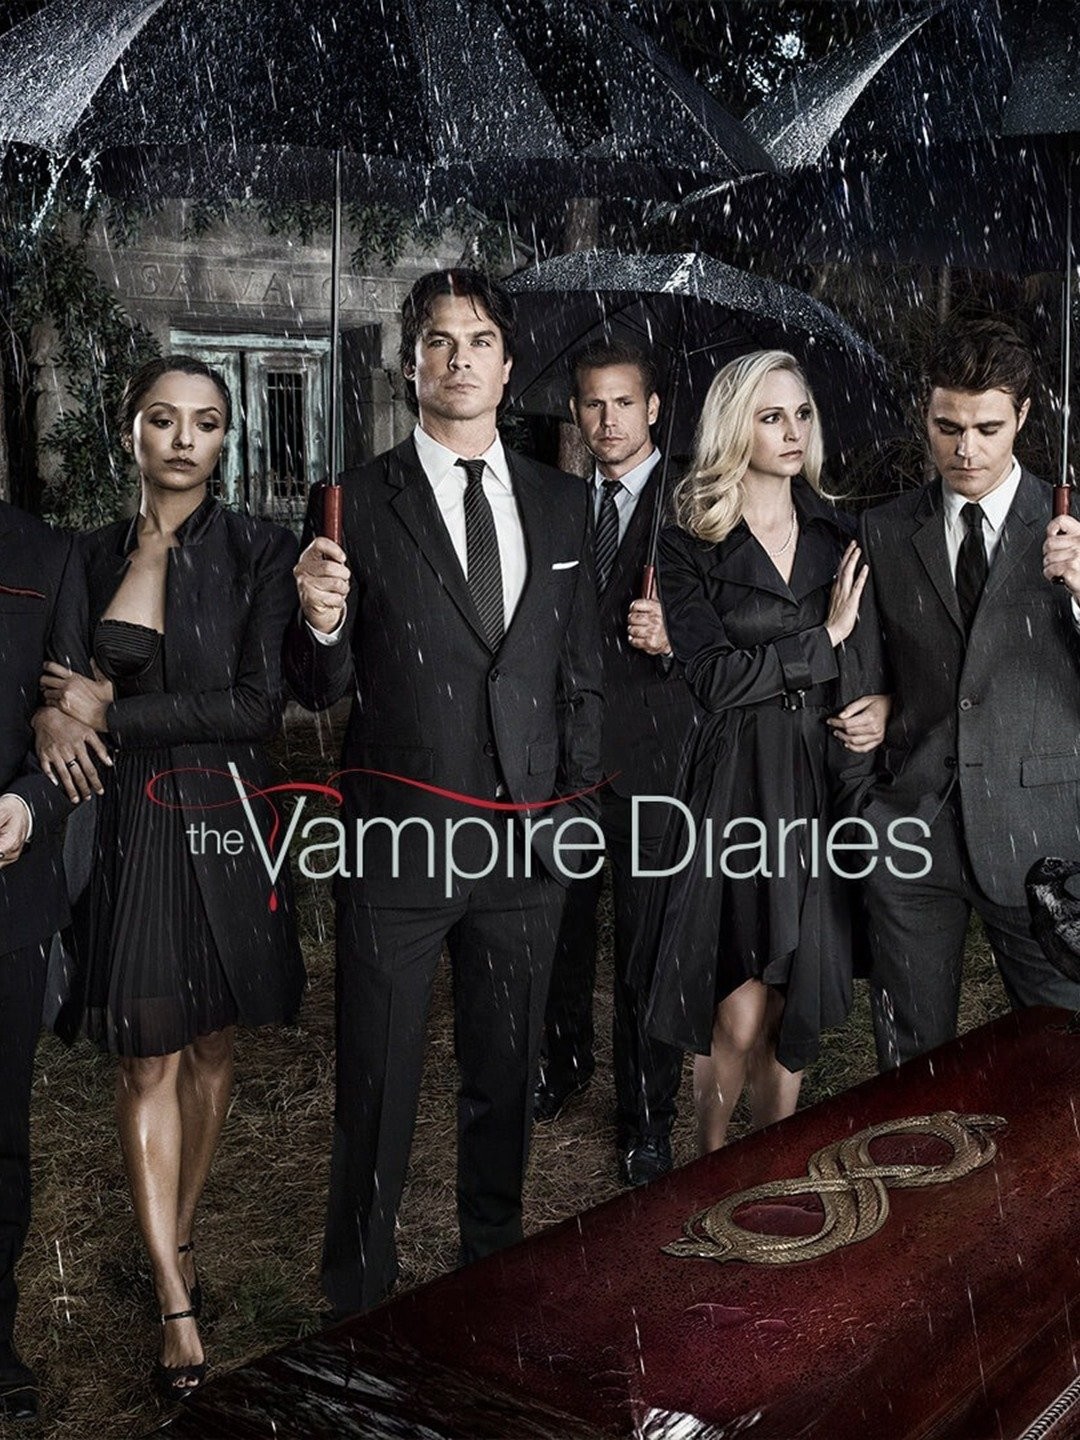 This Has to Hurt - The Vampire Diaries Season 6 Episode 5 - TV Fanatic